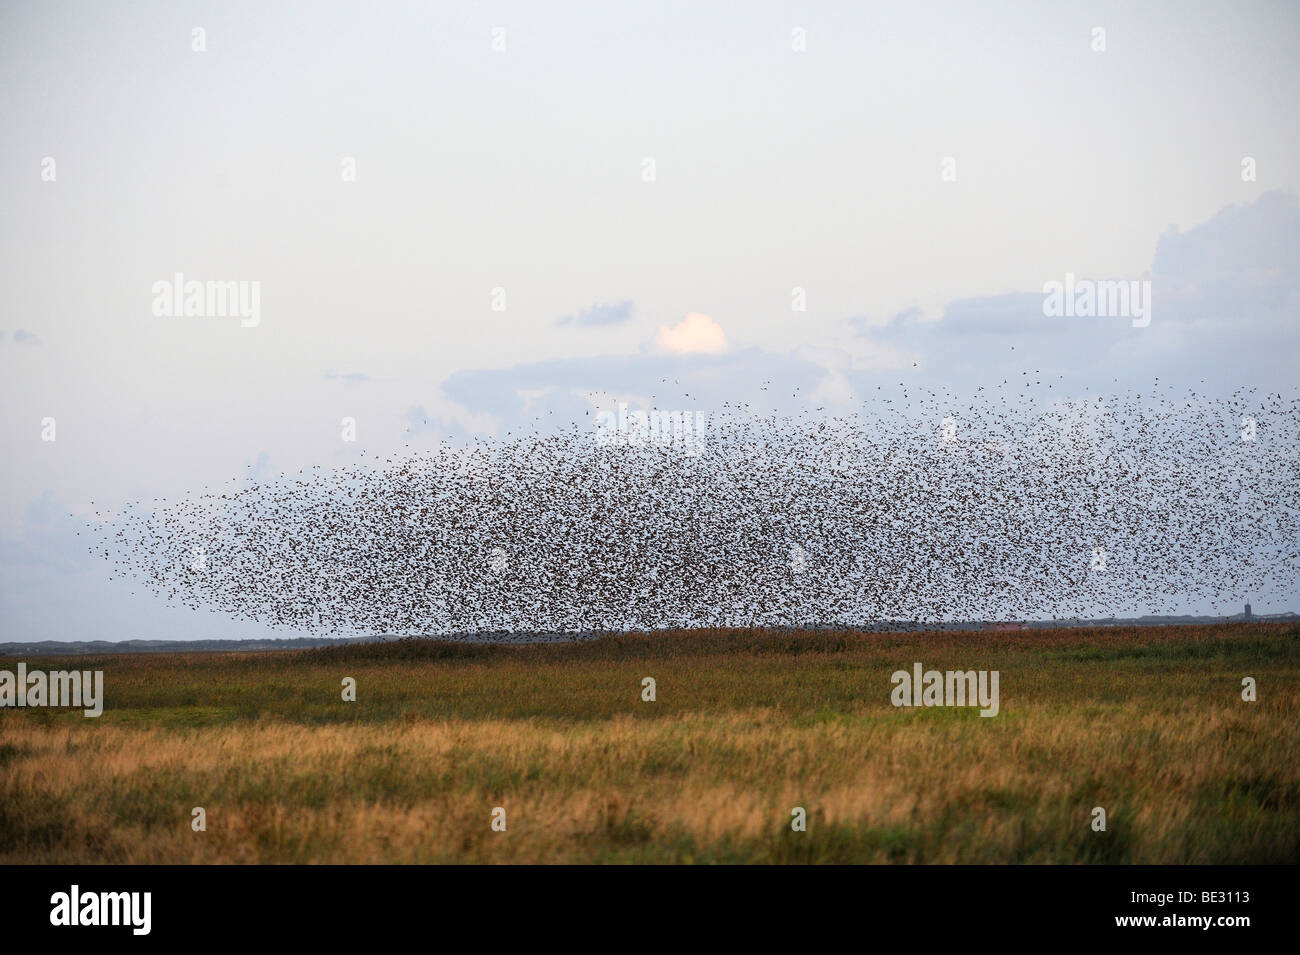 Flock of Starling (Sturnus vulgaris) Stock Photo